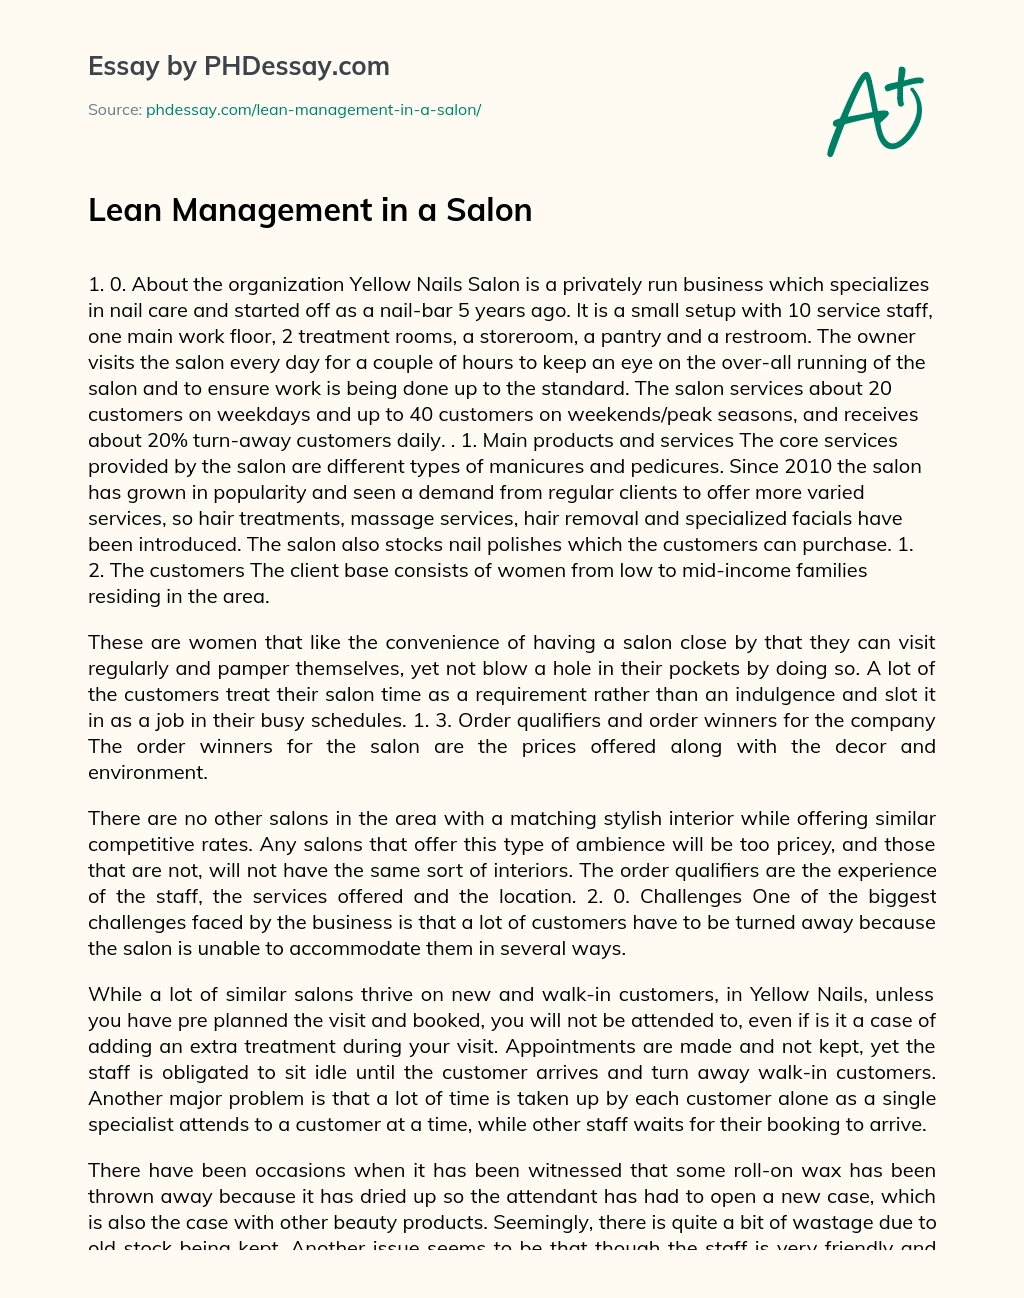 Lean Management in a Salon essay